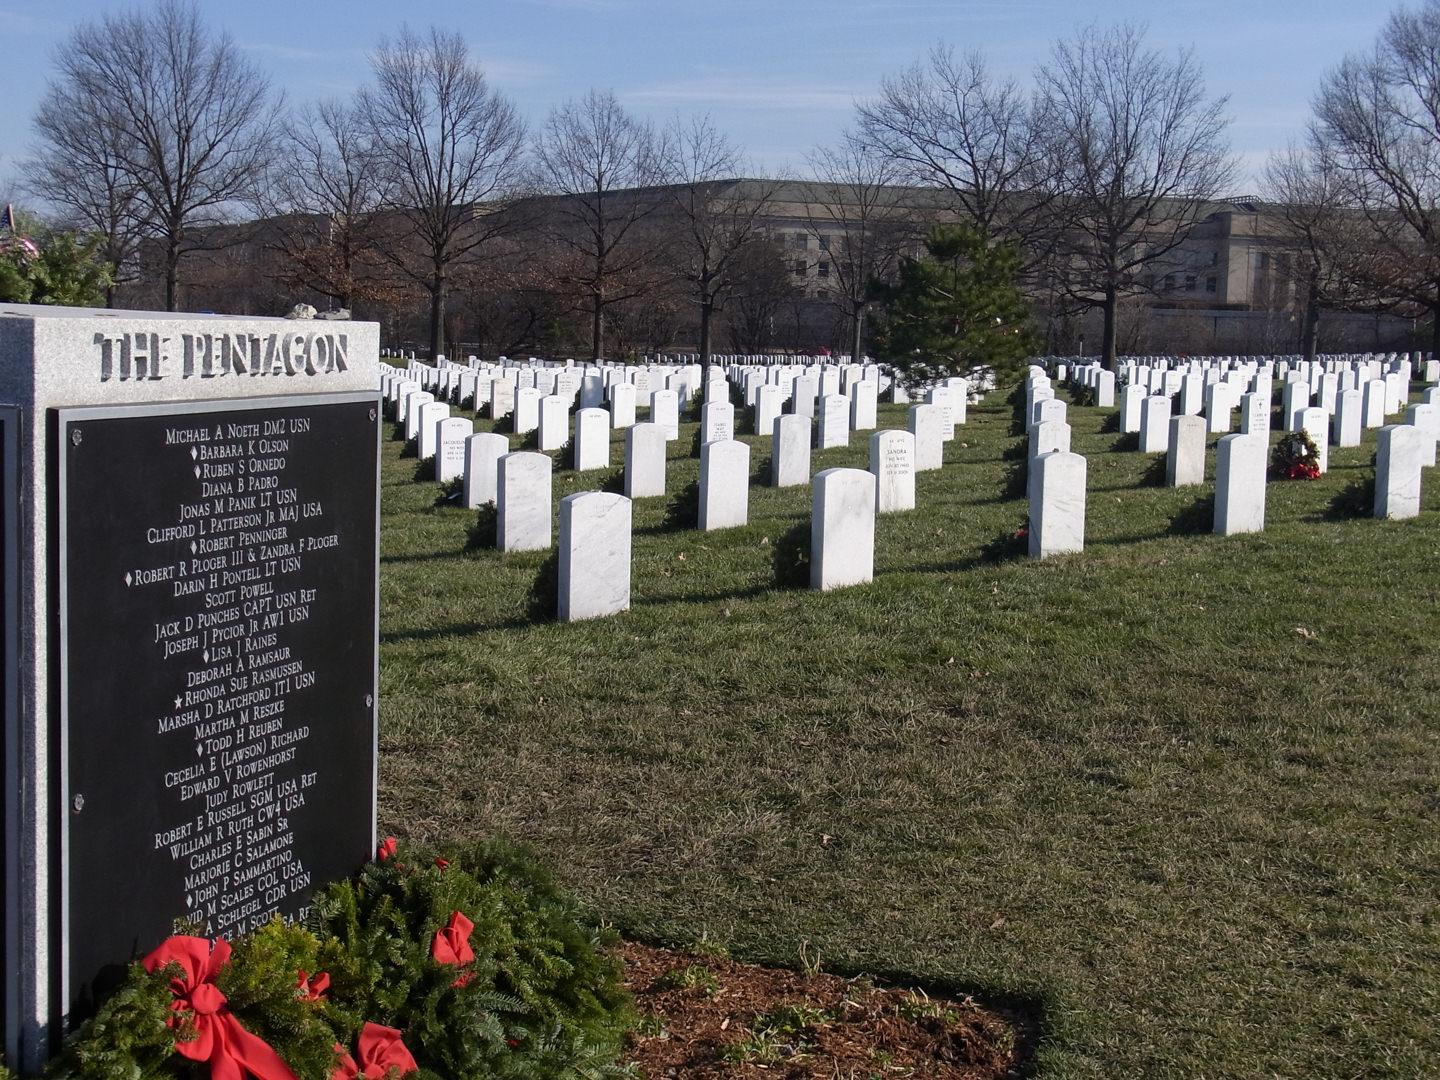 Pentagon 9/11 Memorial - Pentagon in the background